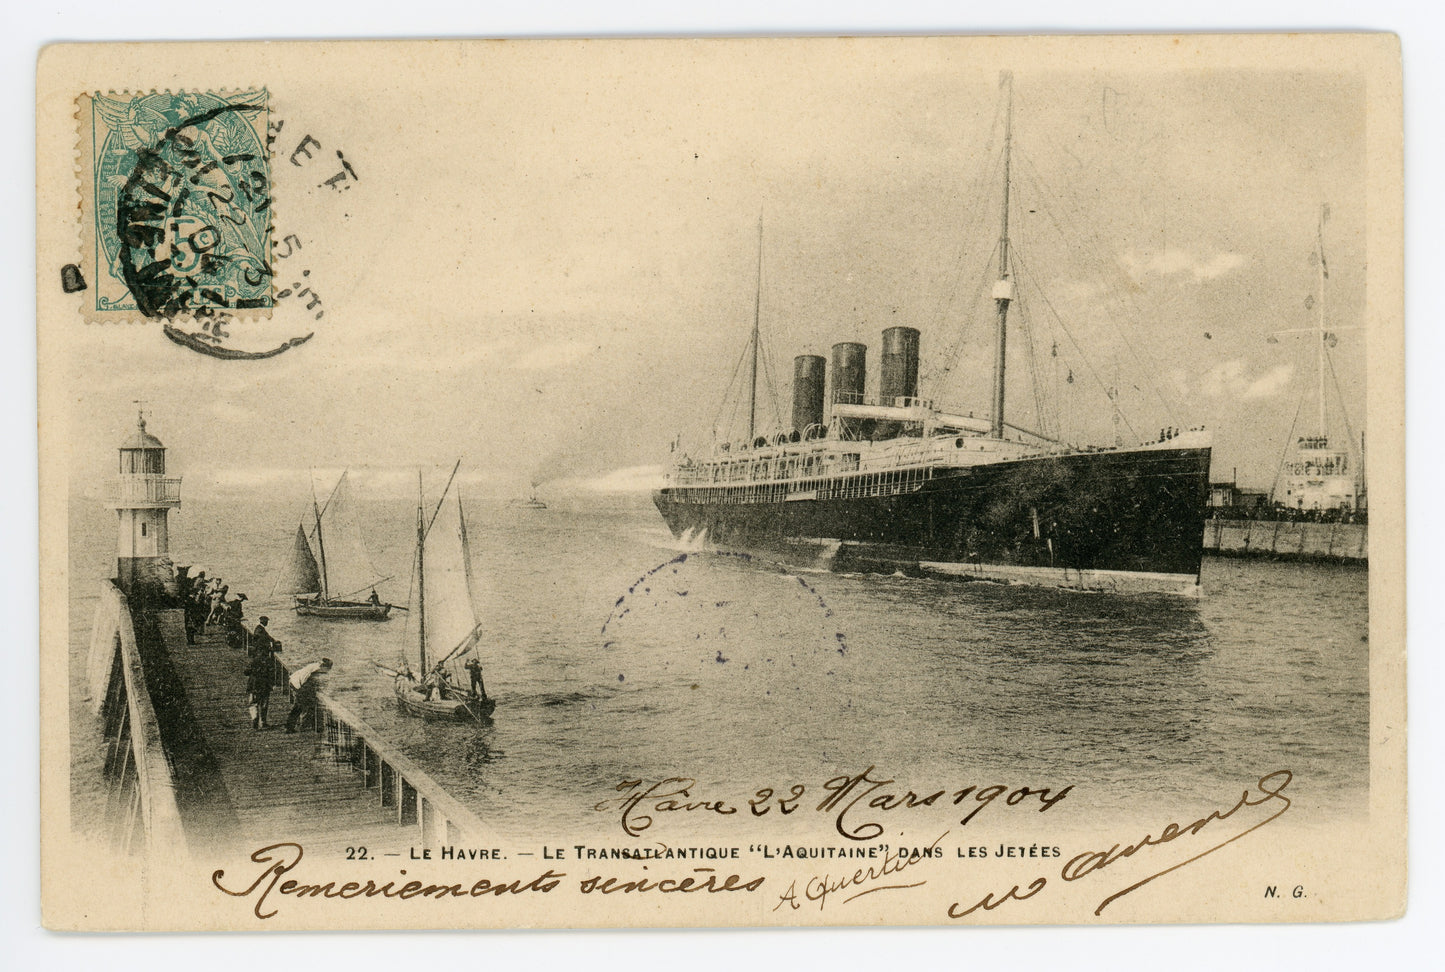 Steamship L'Aquitaine